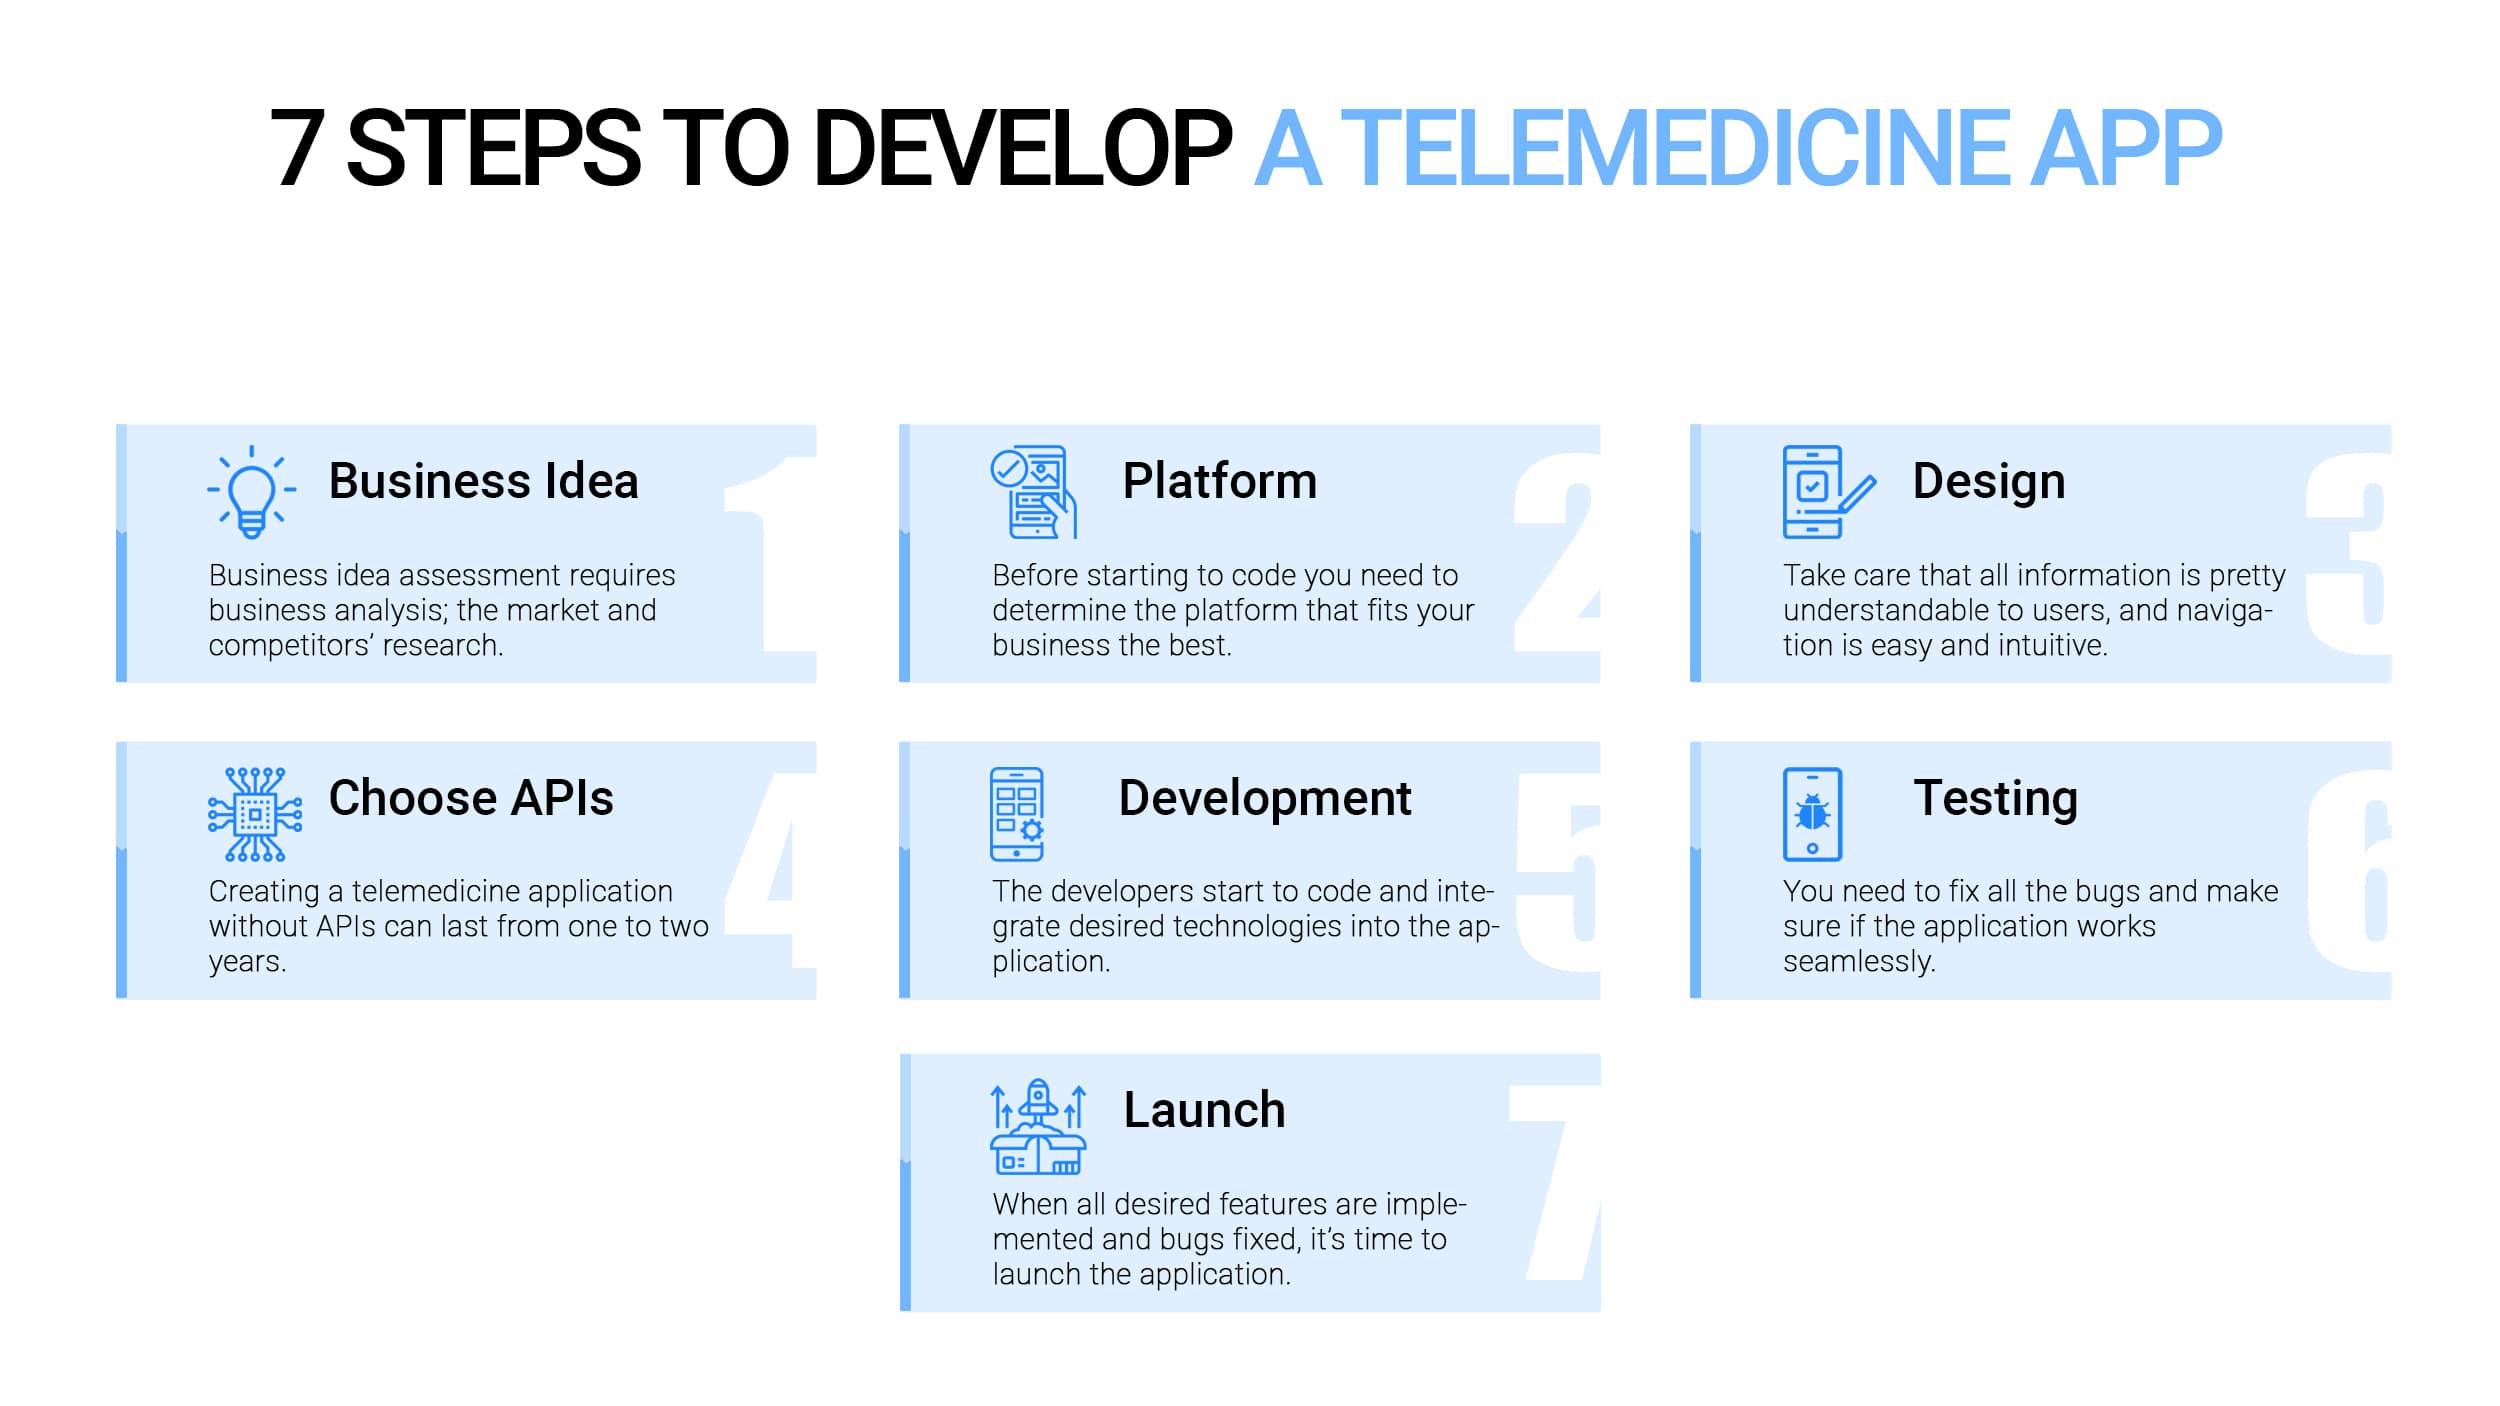 How to develop a telemedicine app